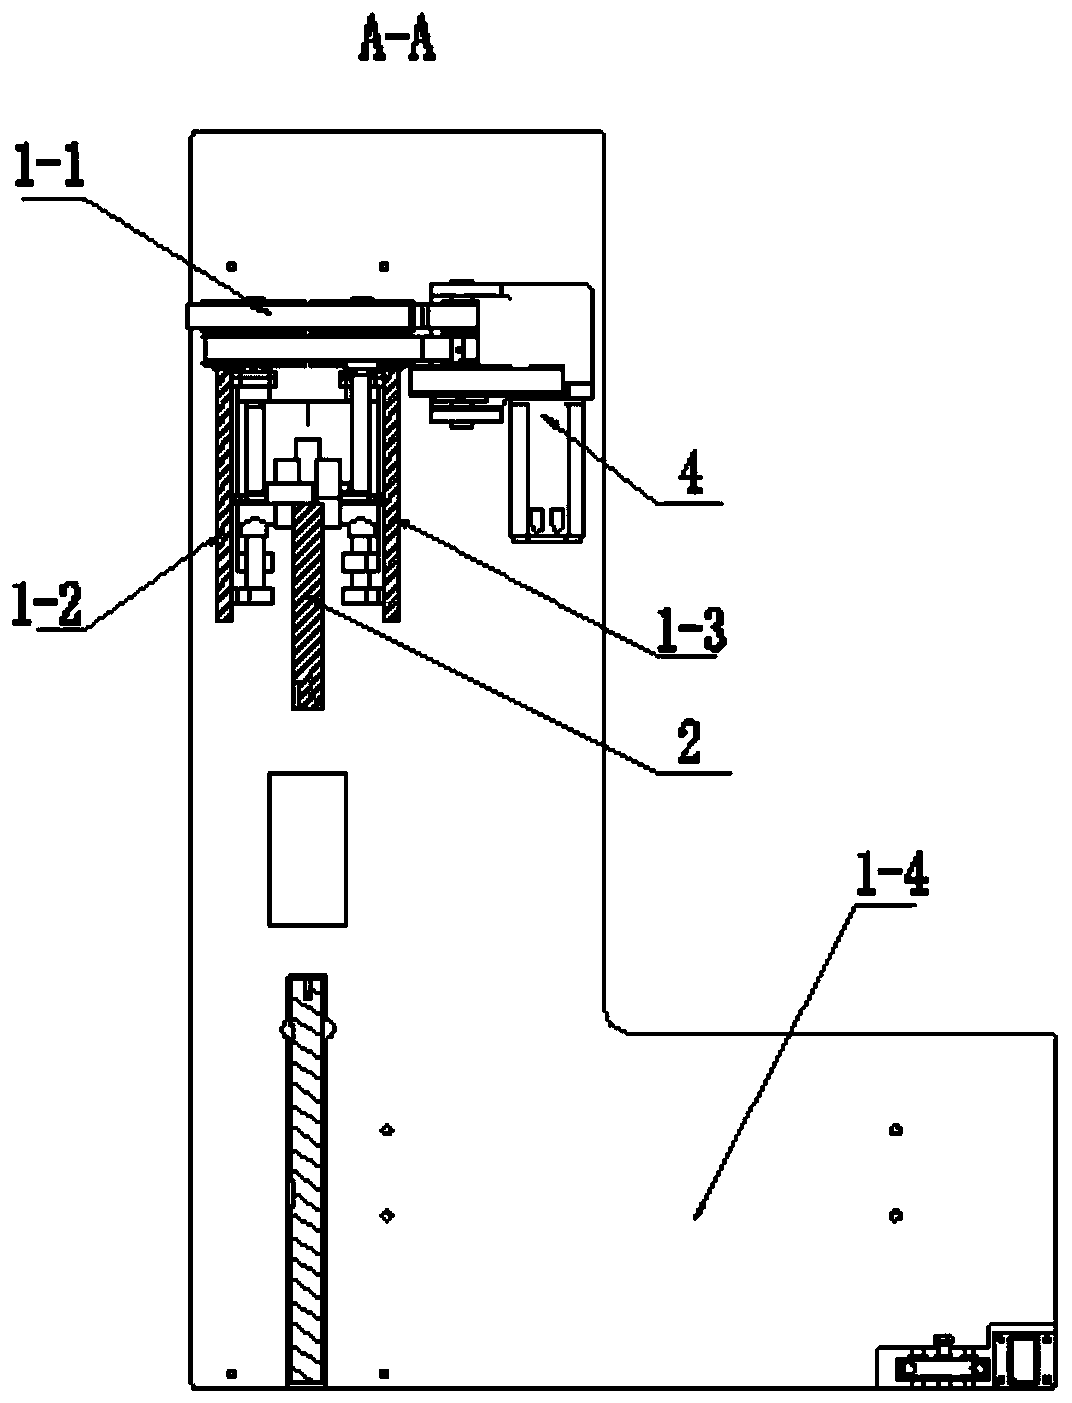 CNC bending machine transmission system and CNC bending machine